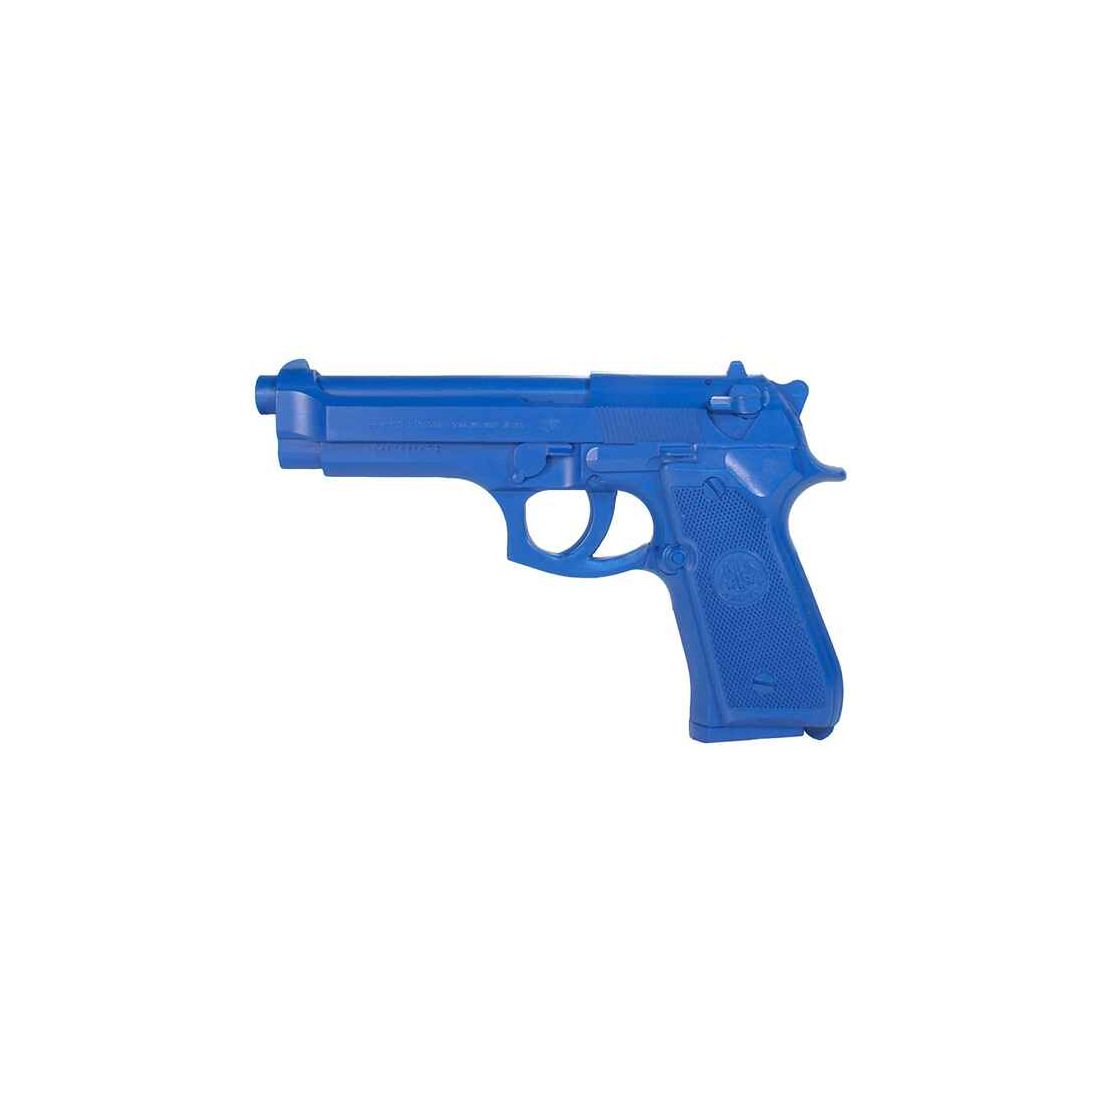 Trainingspist. Blue Guns Beretta 92F